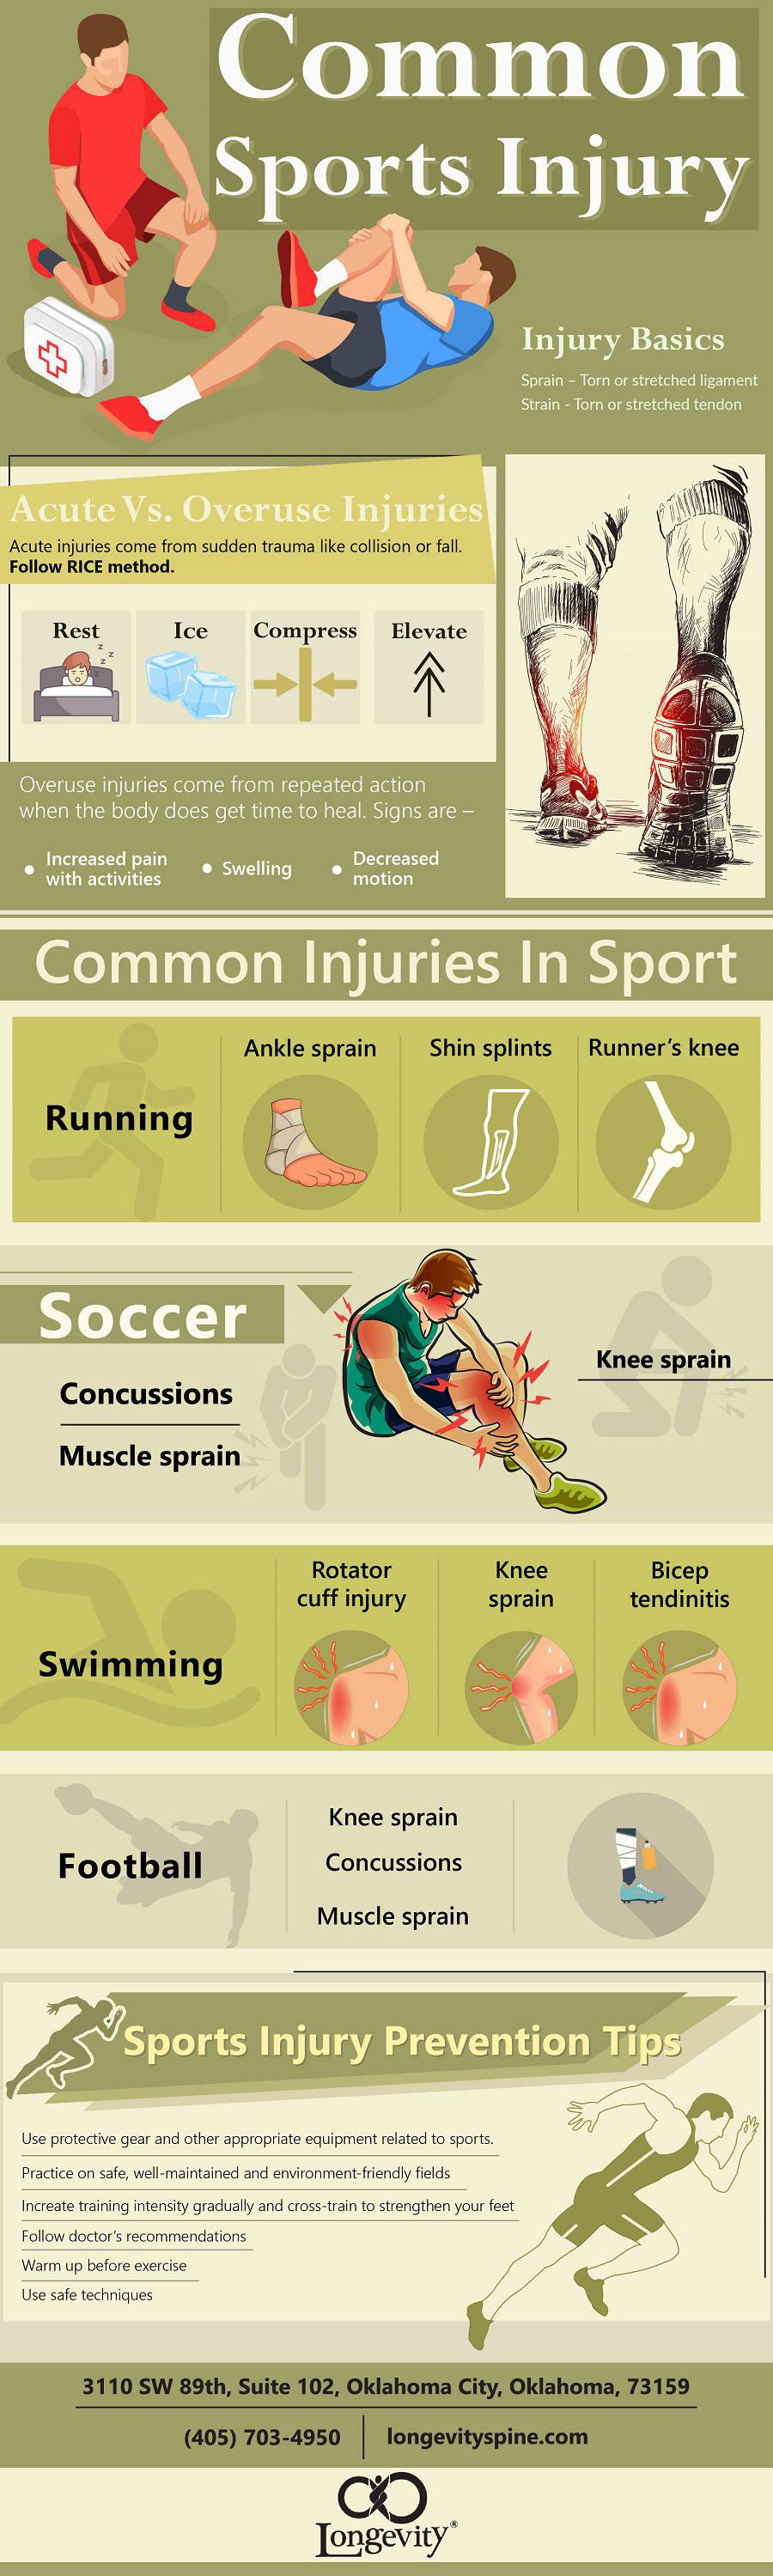 Common Sports Injuries Infographic Laptrinhx